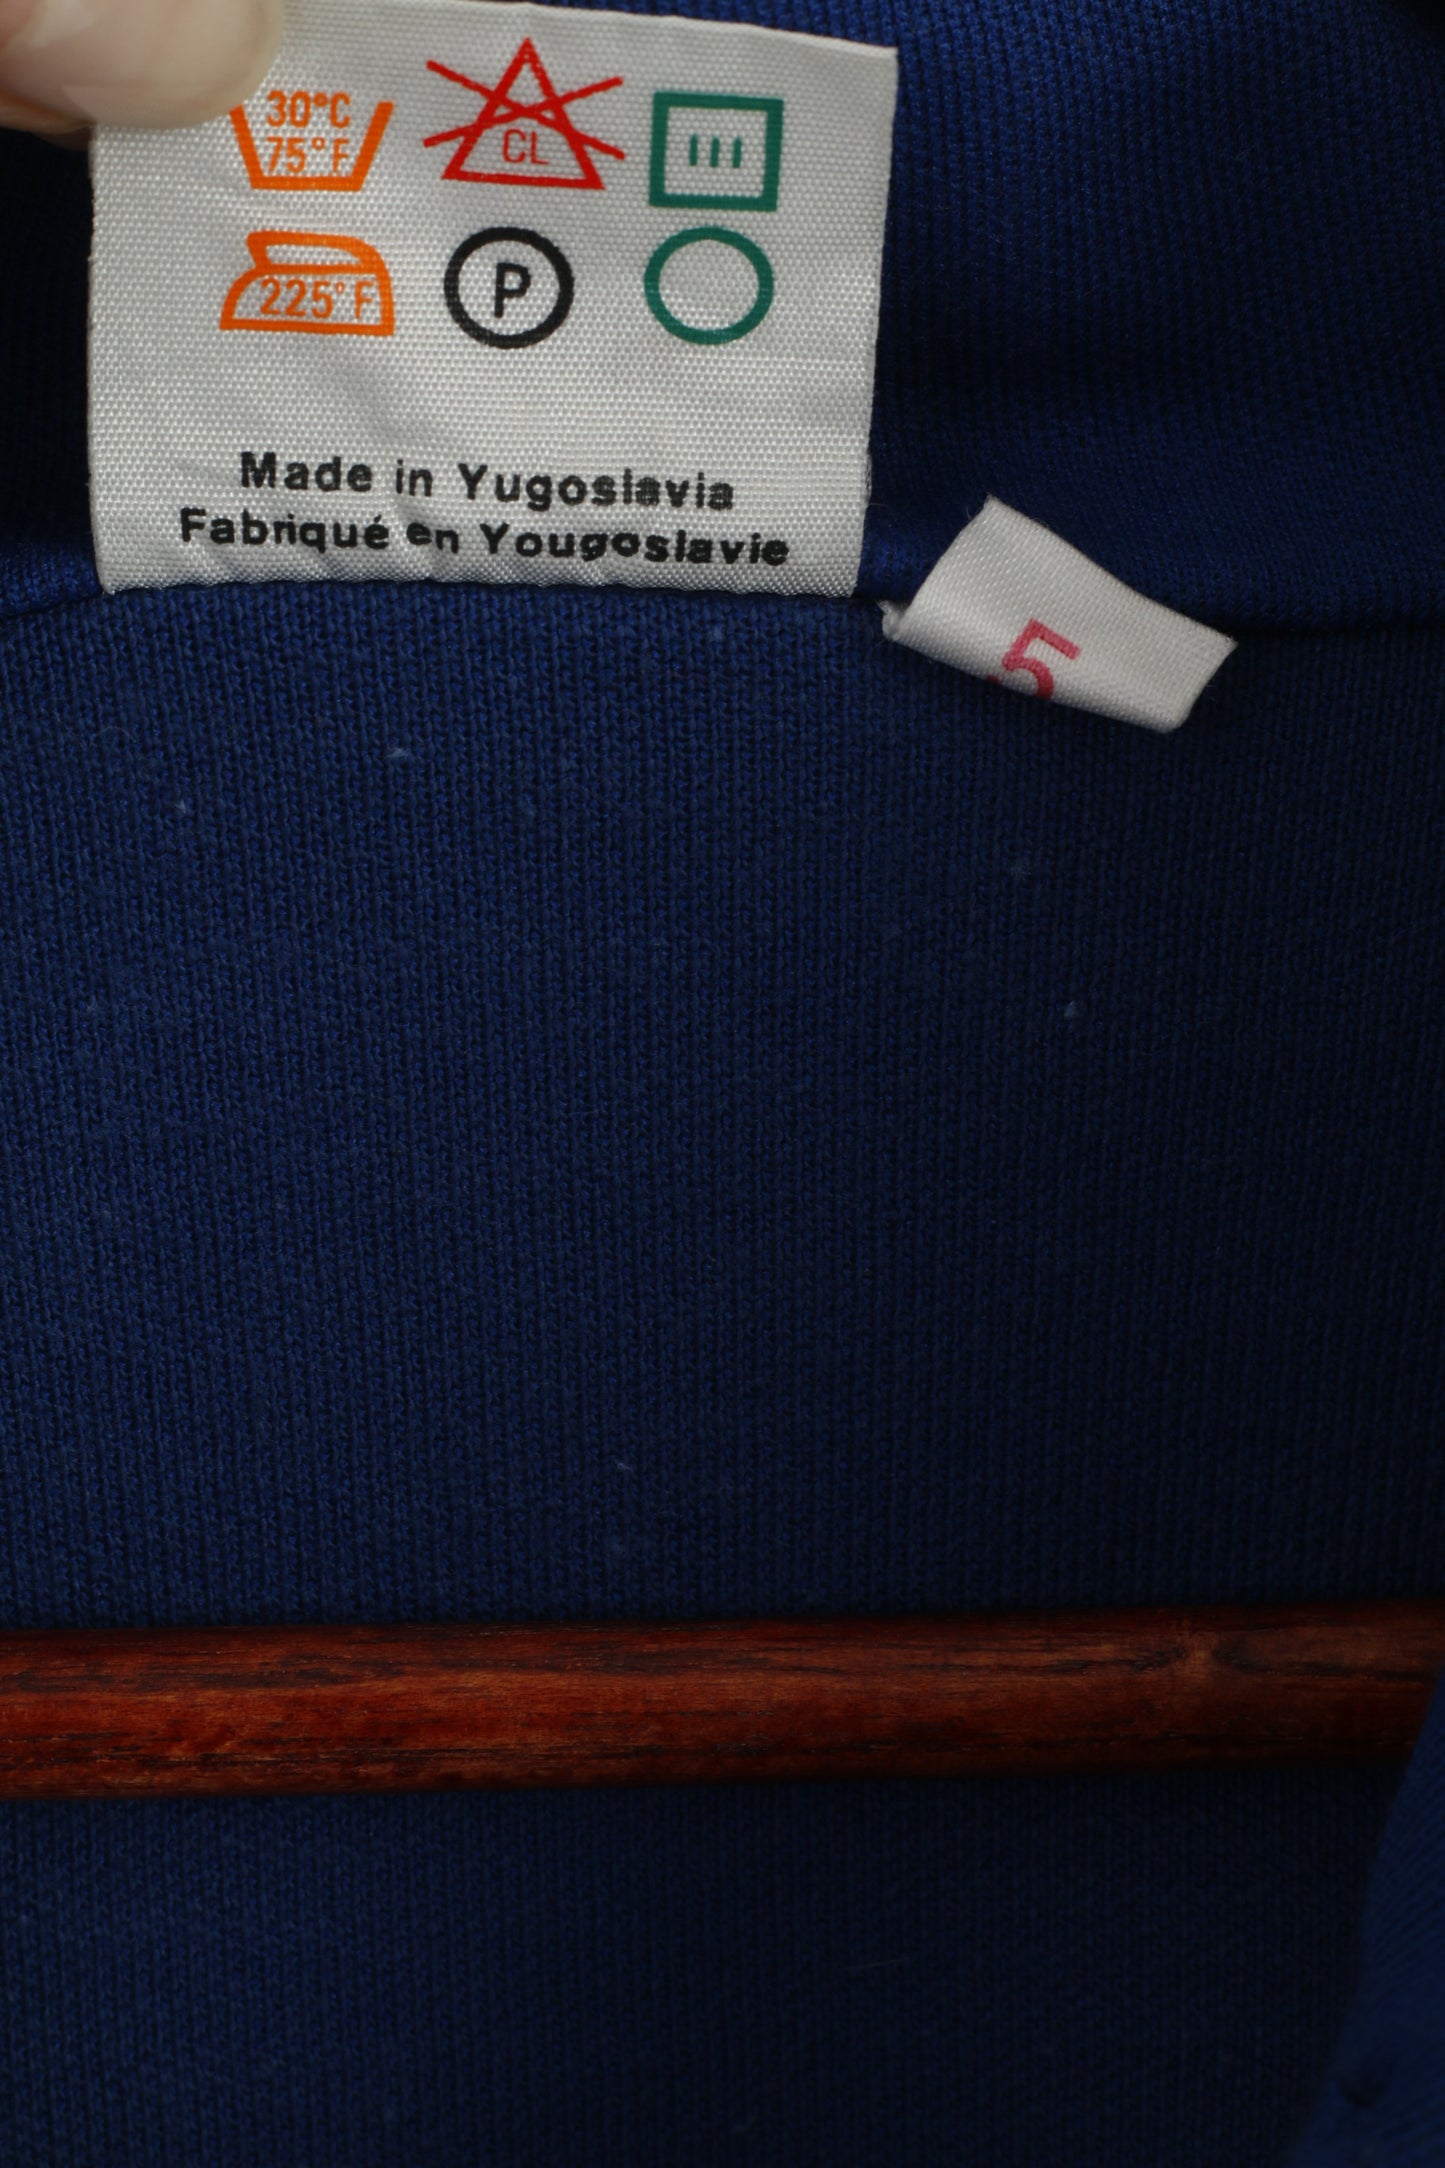 Adidas Women 5 M/L Sweatshirt Vintage 80s Navy Cotton Made in Yugoslavia Top